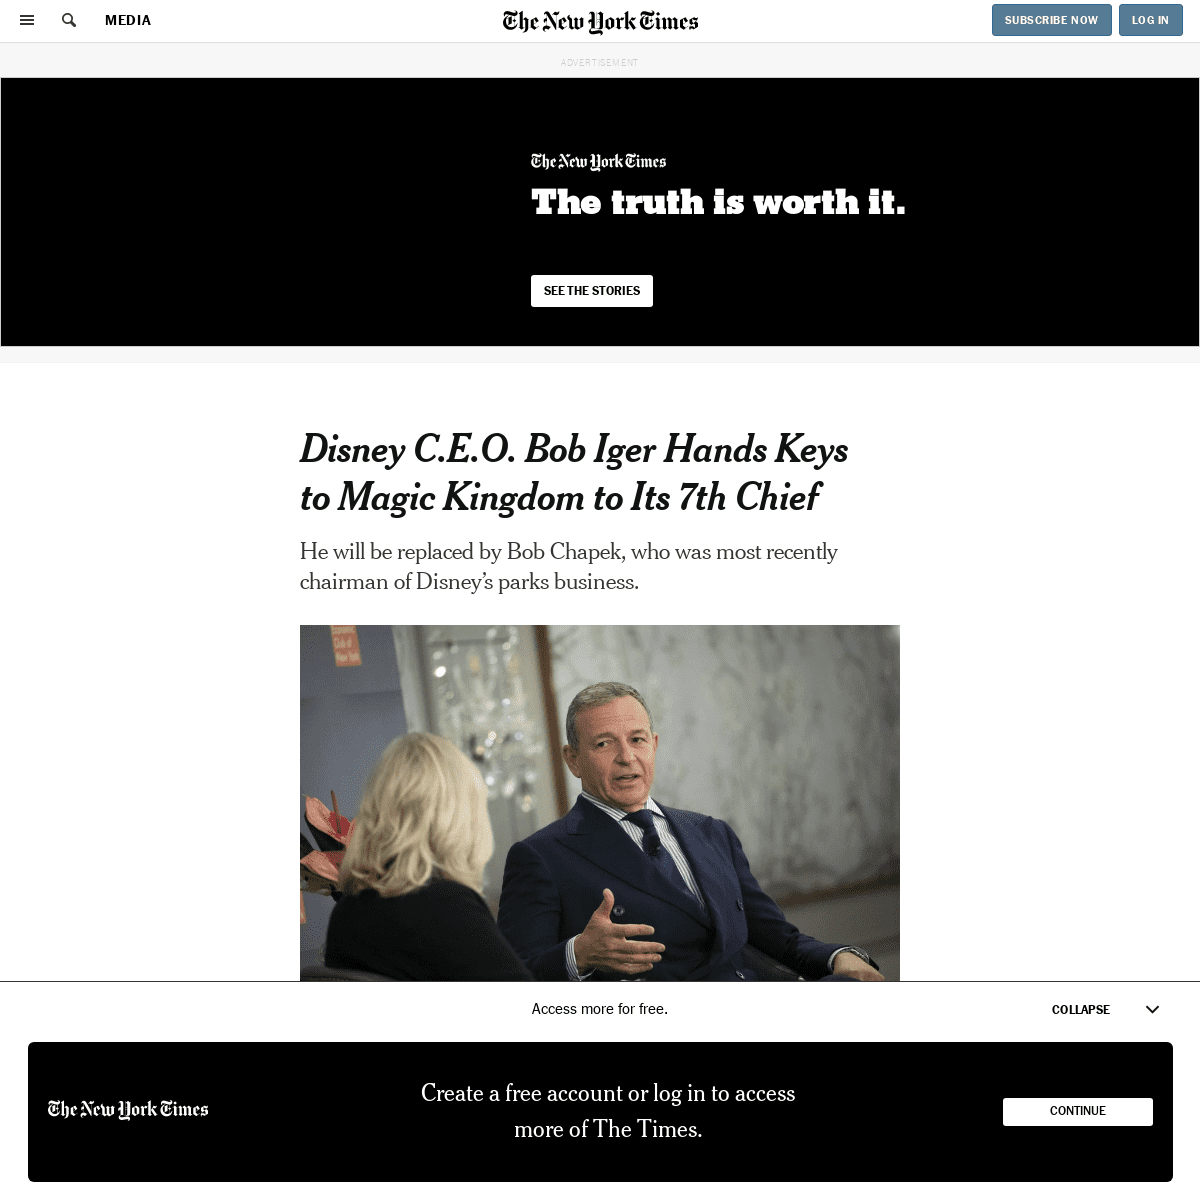 Disney C.E.O. Bob Iger Hands Keys to Magic Kingdom to Its 7th Chief - The New York Times